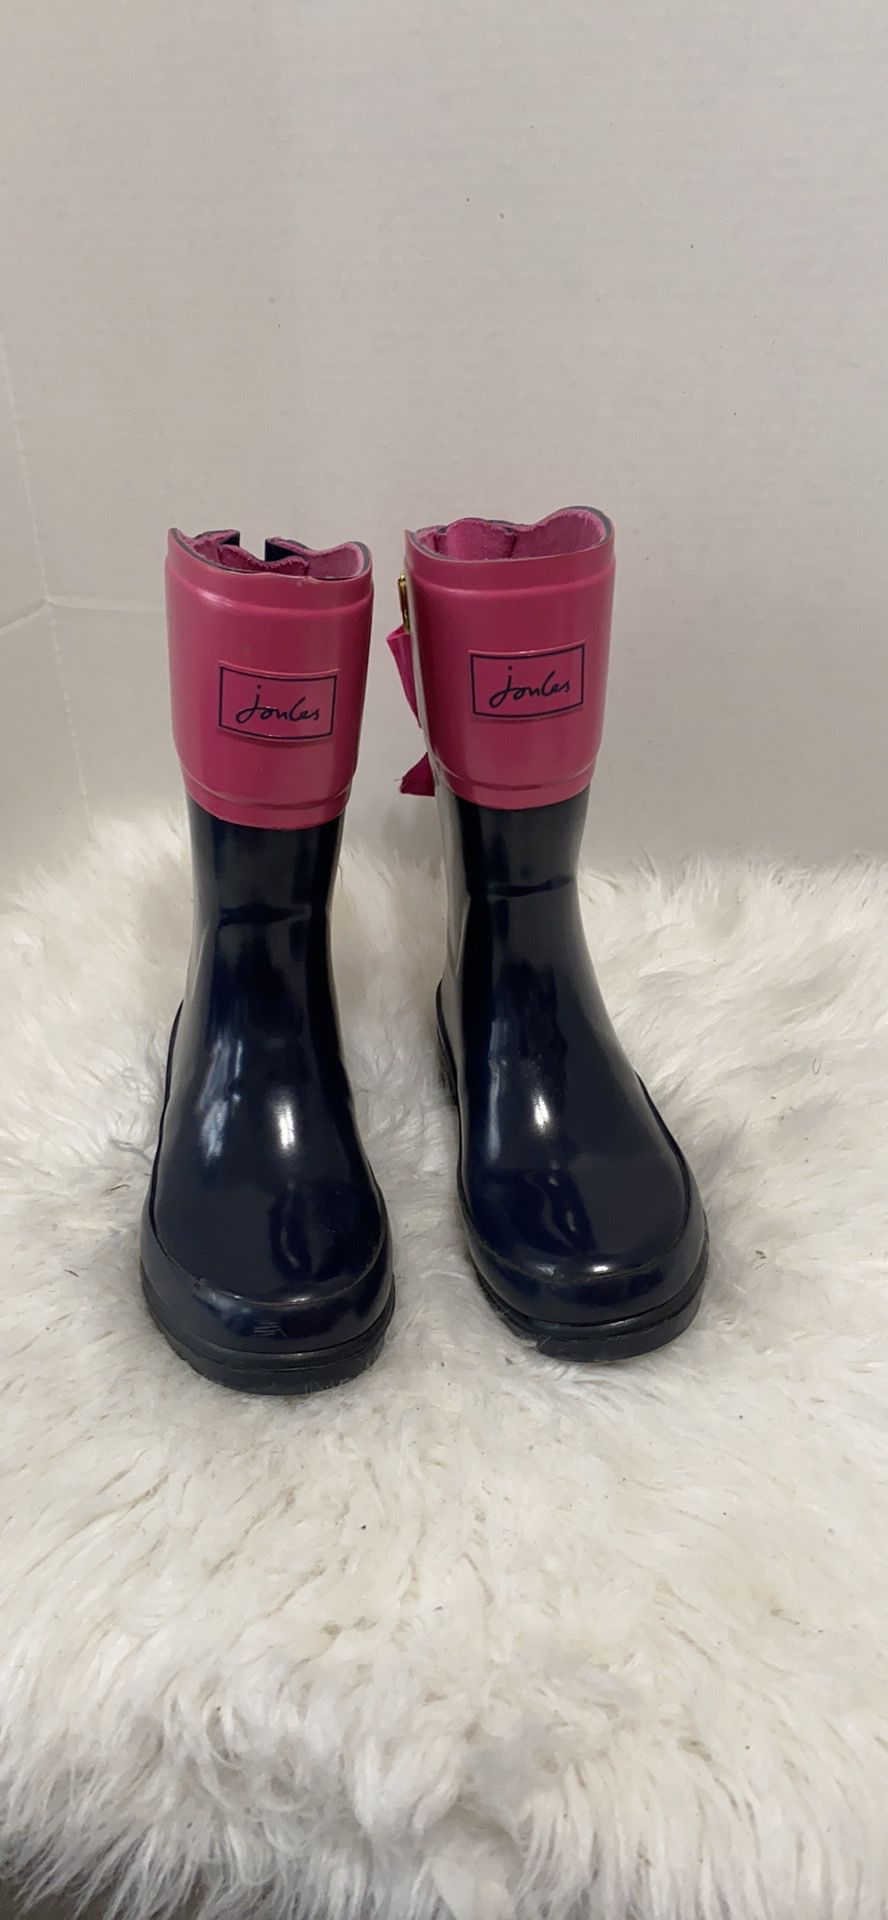 Janels girls rain boots size 1